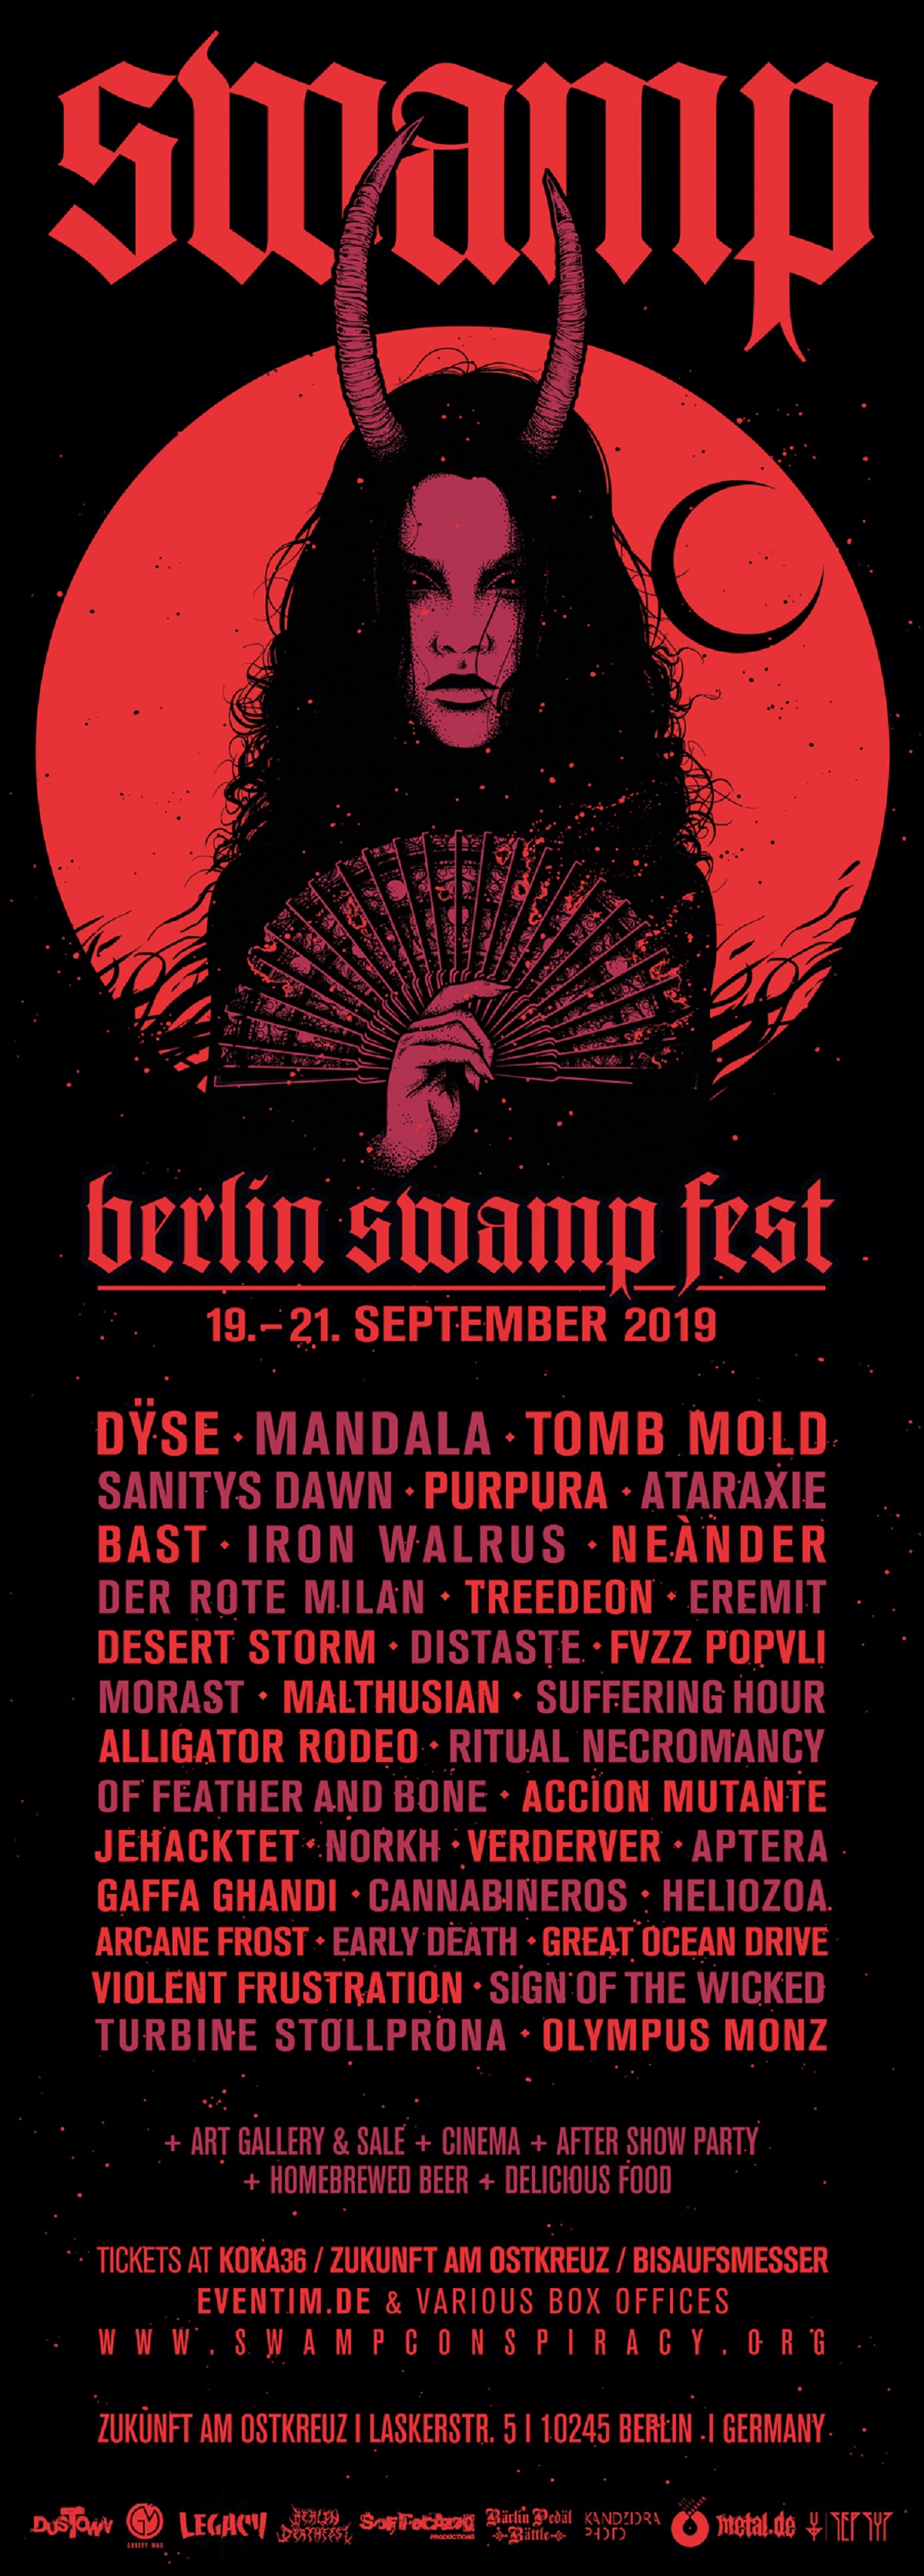 Berlin Swamp Fest 2019